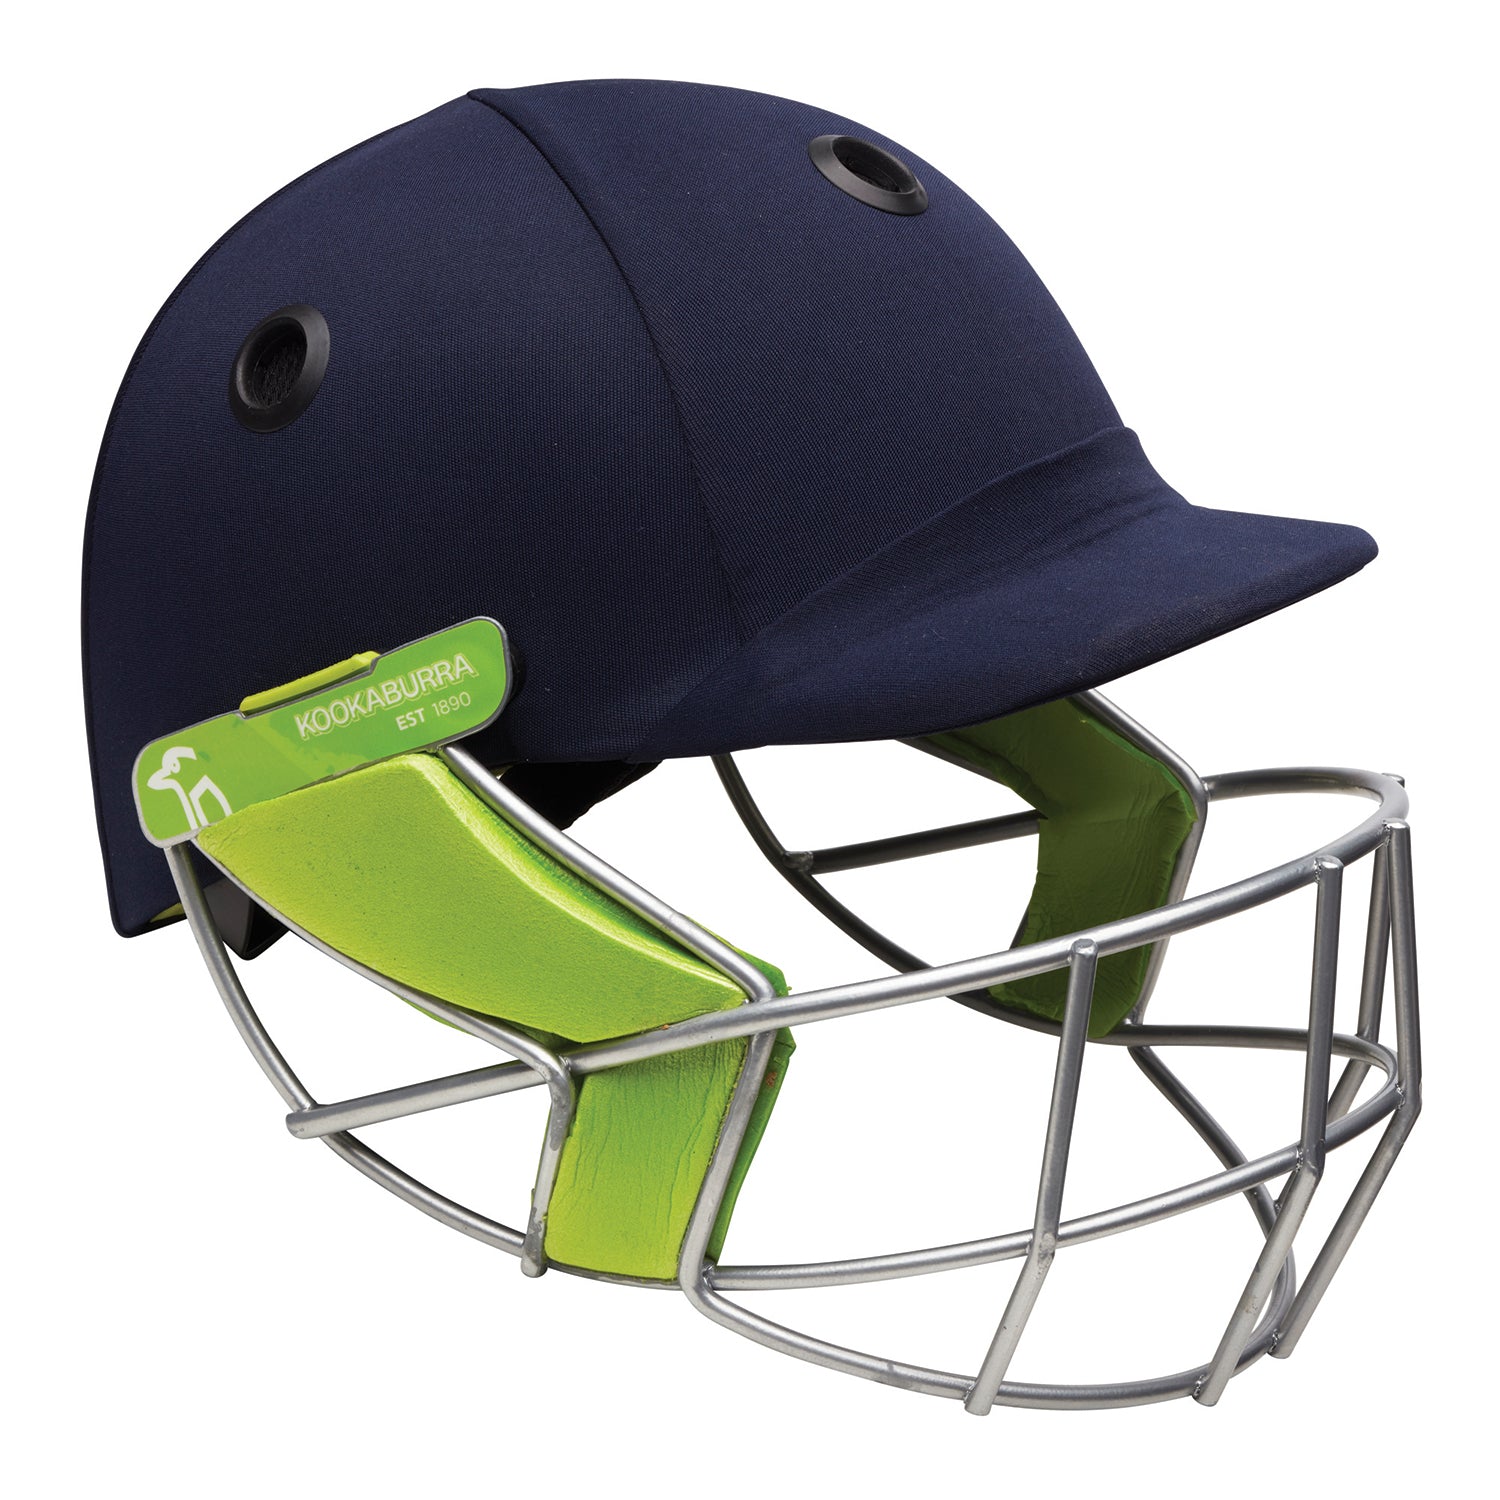 Kookaburra Pro 1500 Titanium Cricket Helmet Navy